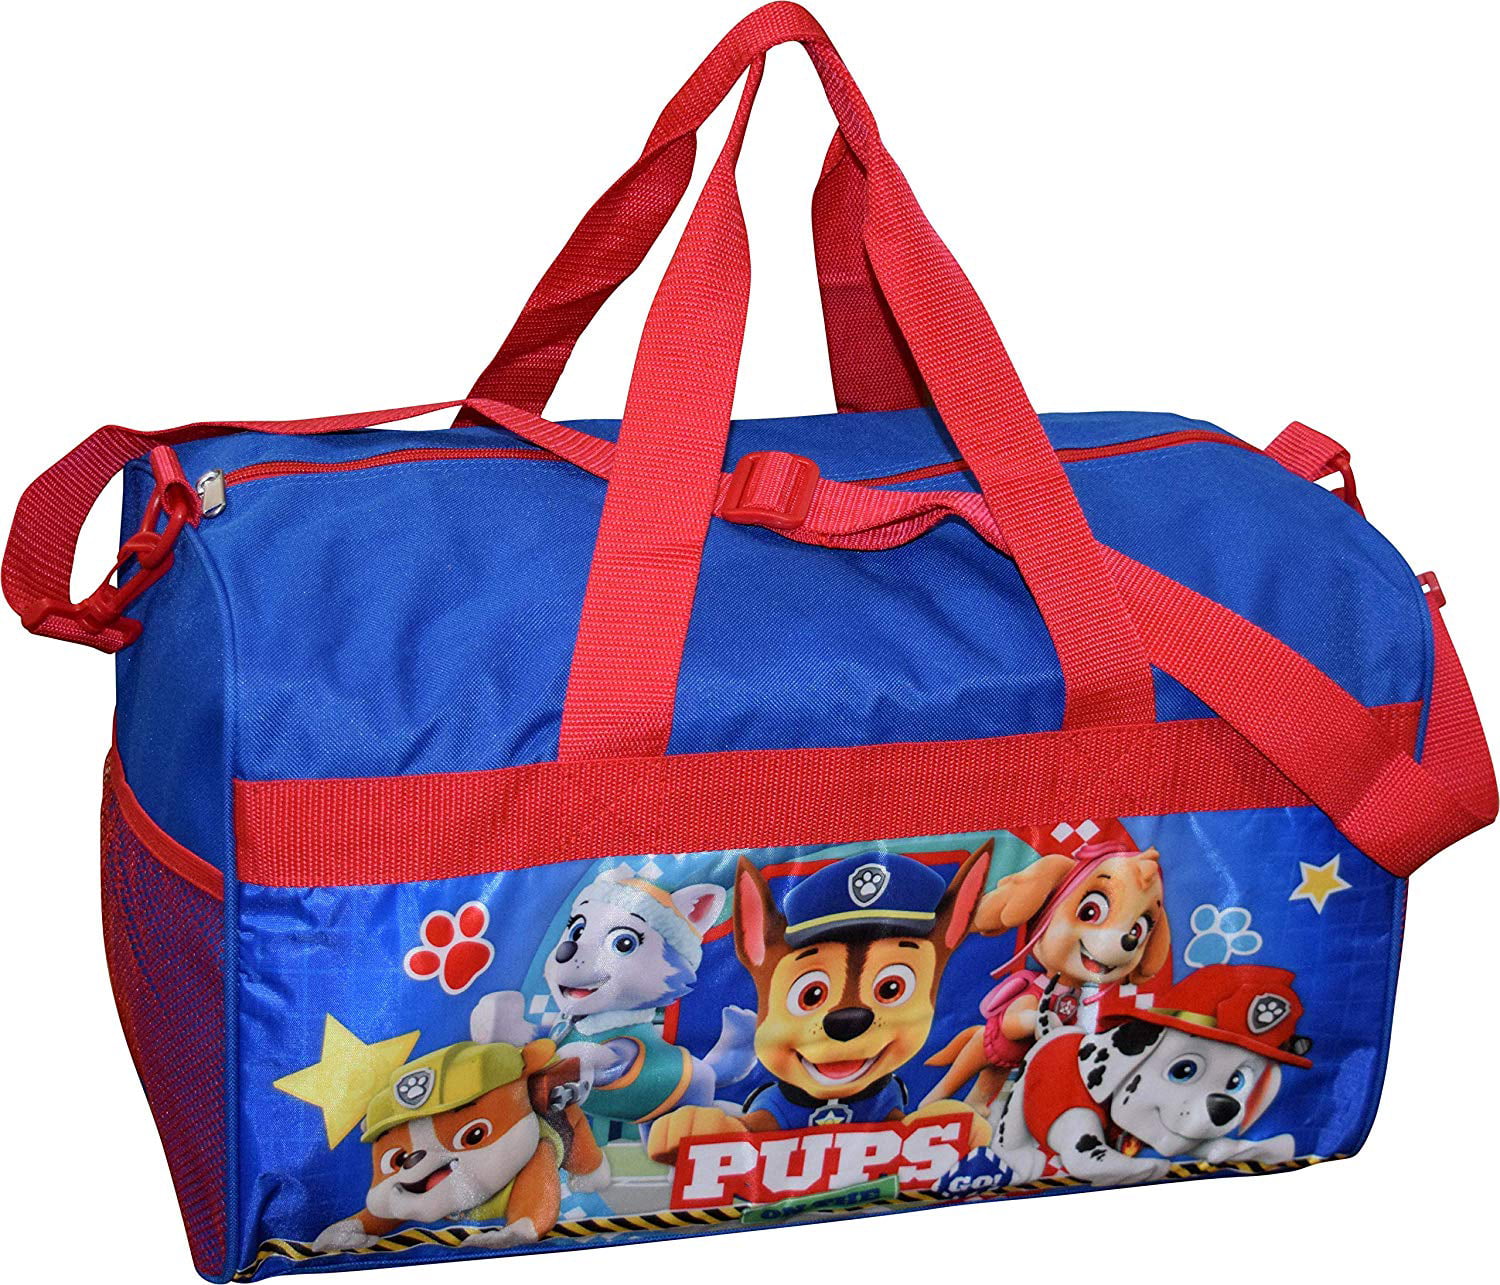 Licensed Overnight Bags Kids' Favorite Cartoon Characters Disney/Paw Patrol 